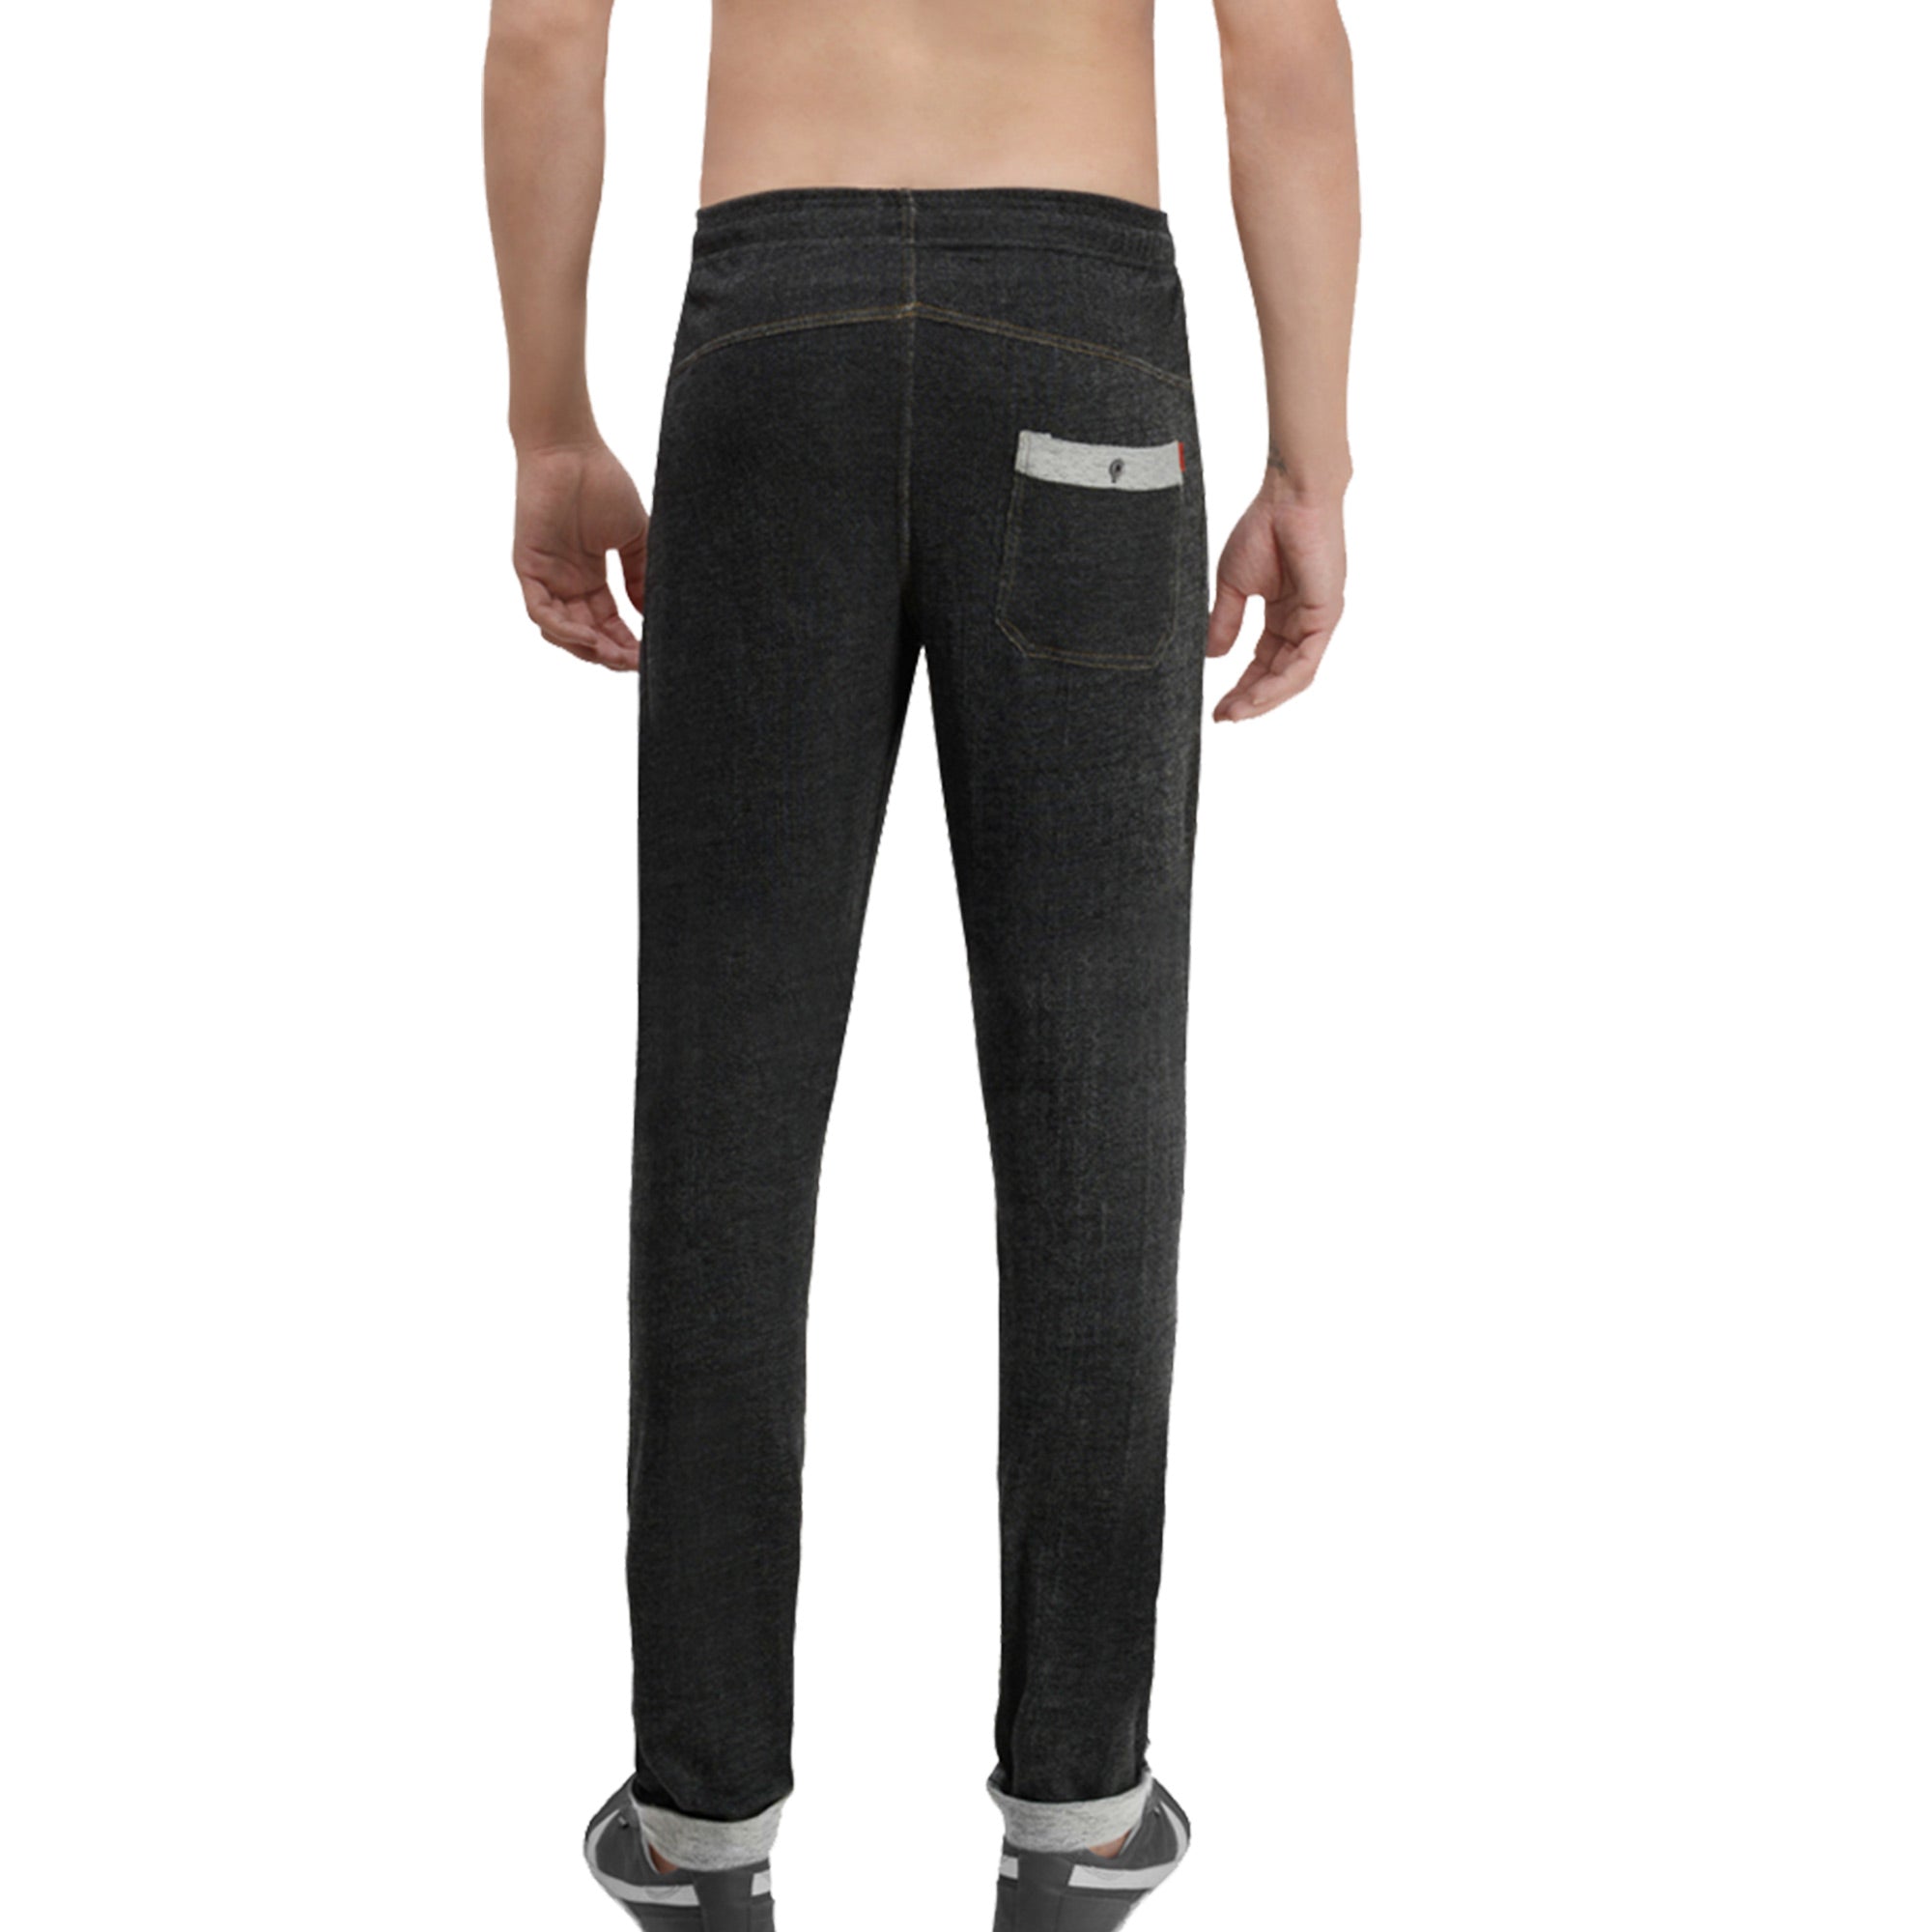 Zoiro Men&#39;s Cotton Rich Dual Side Zipper Pockets Solid Track Pant